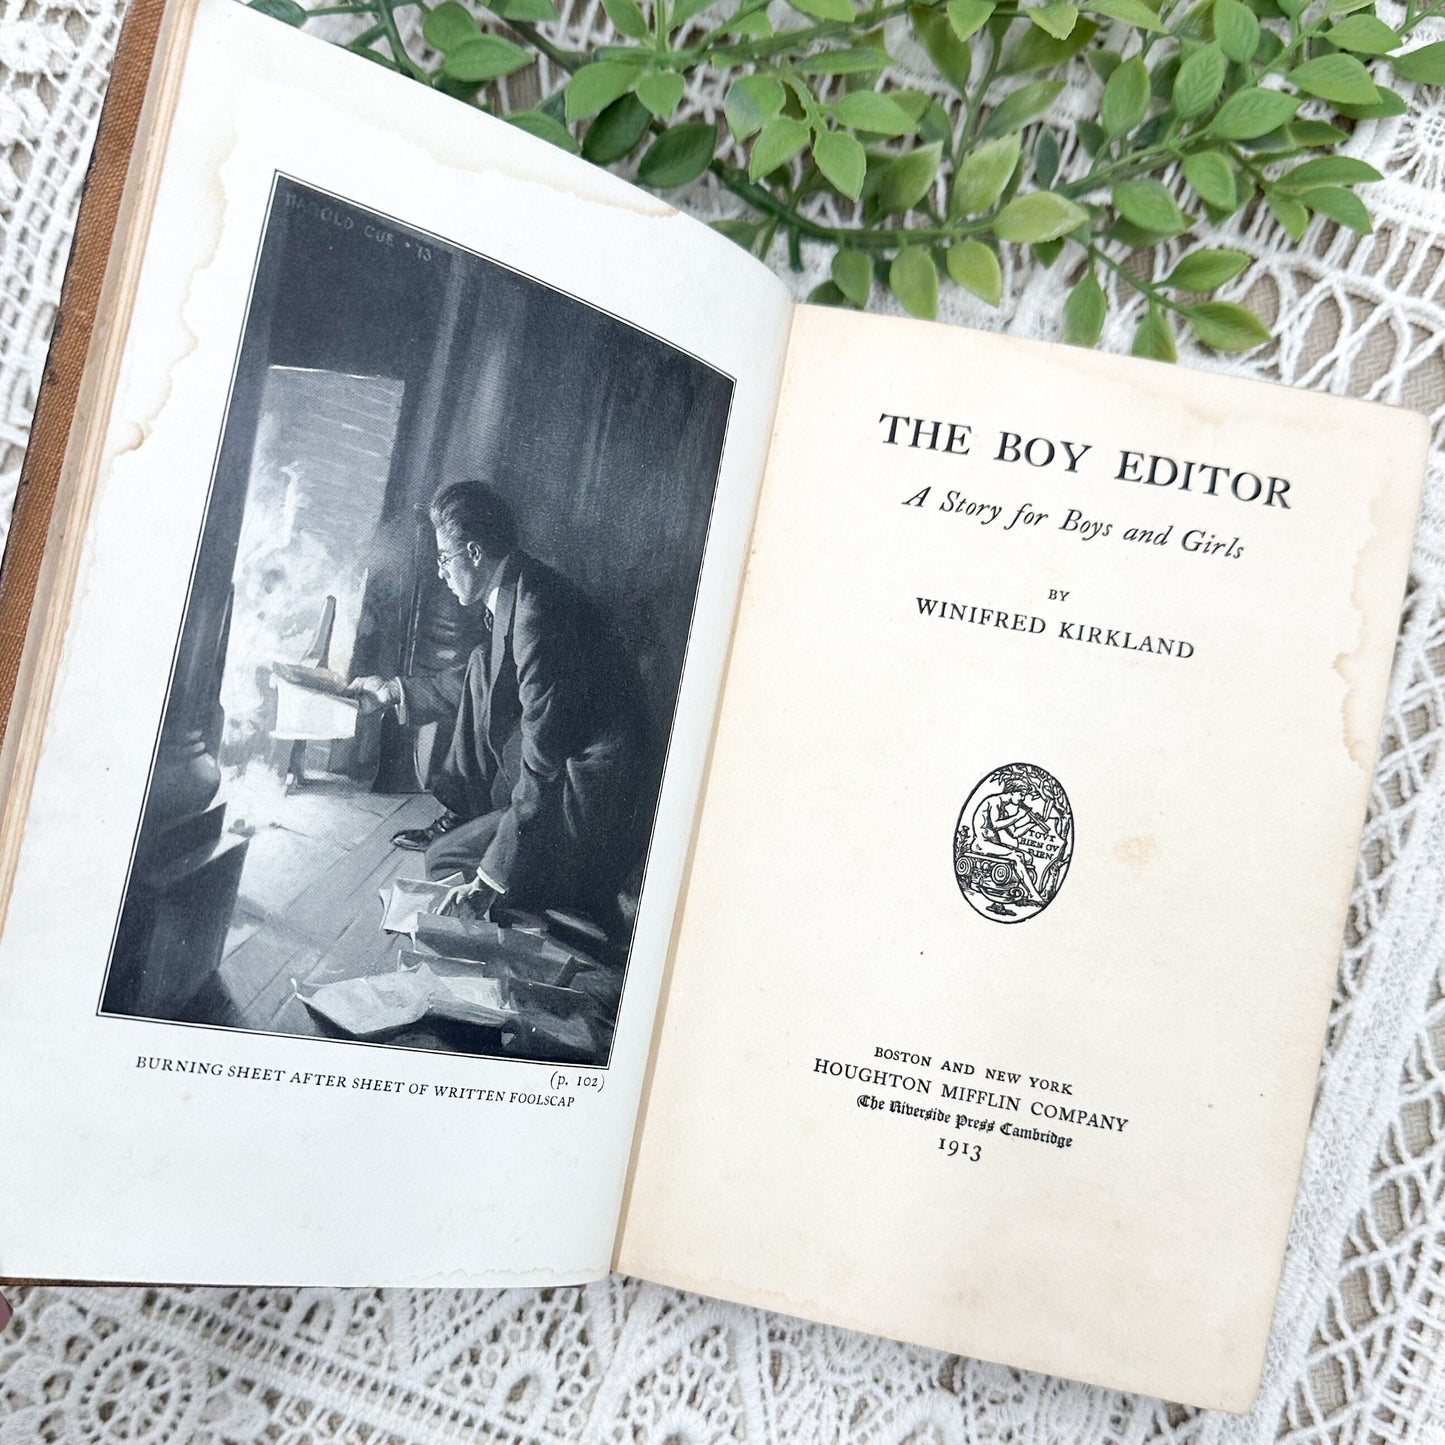 The Boy Editor by Winifred Kirkland